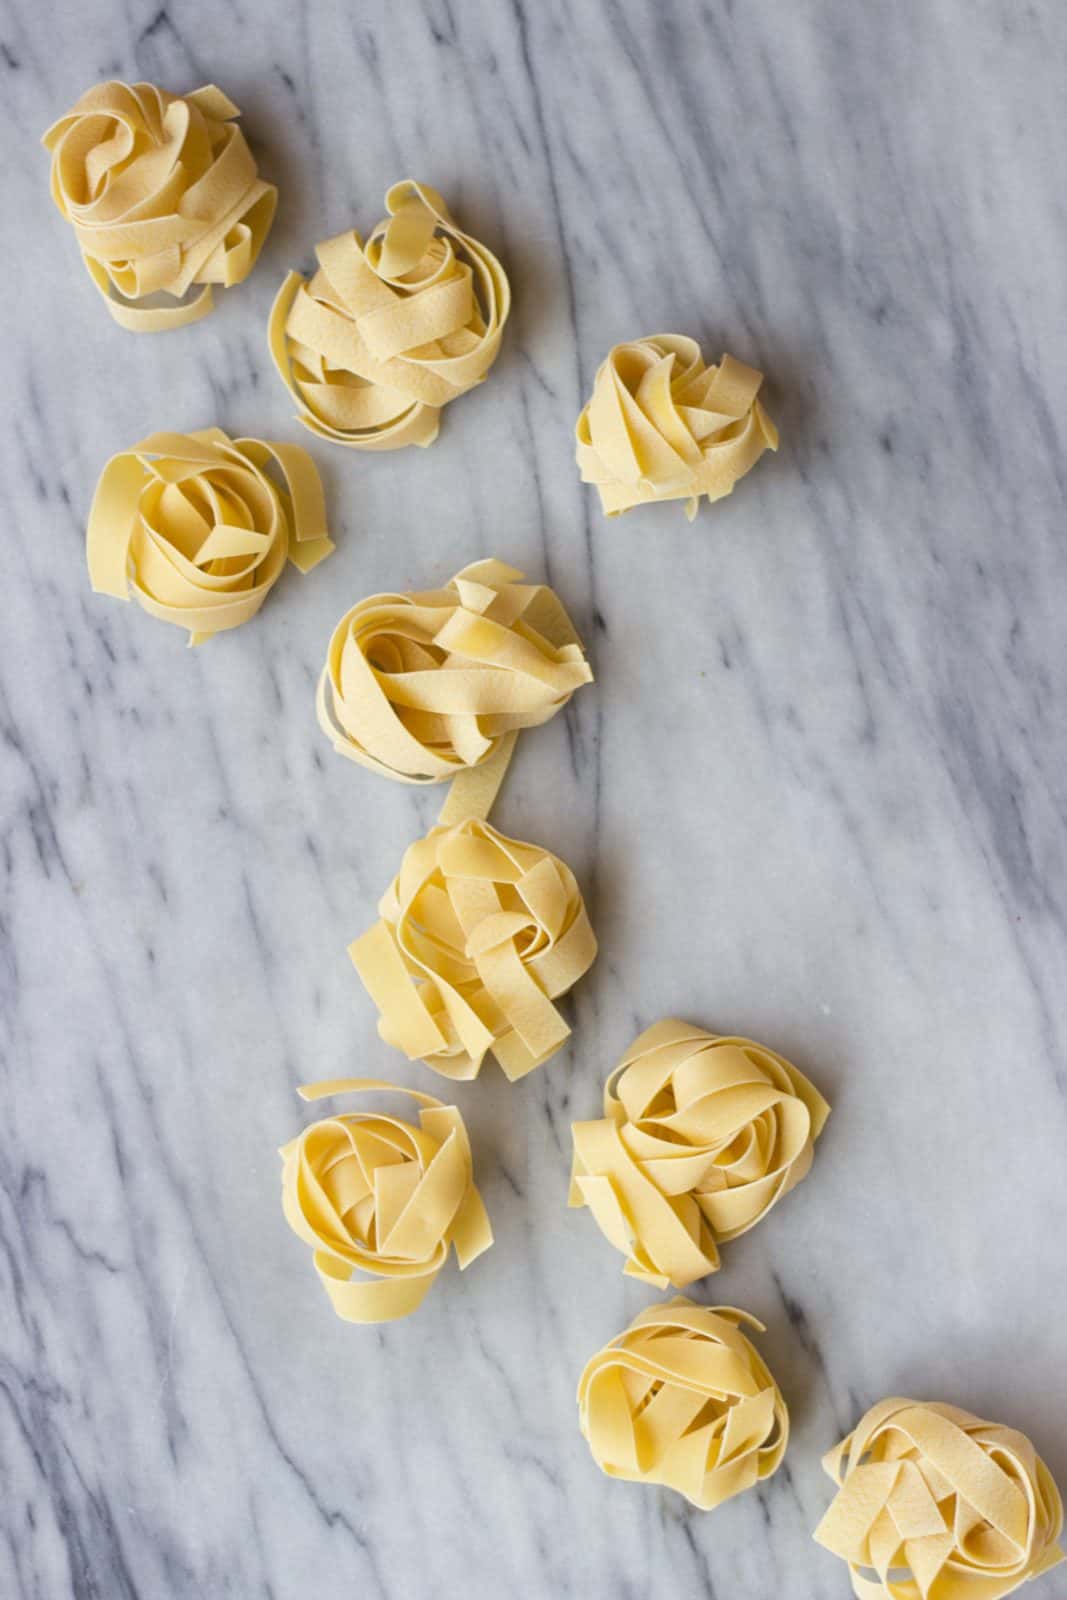 Uncooked Tagliatelle pasta on white marble. 